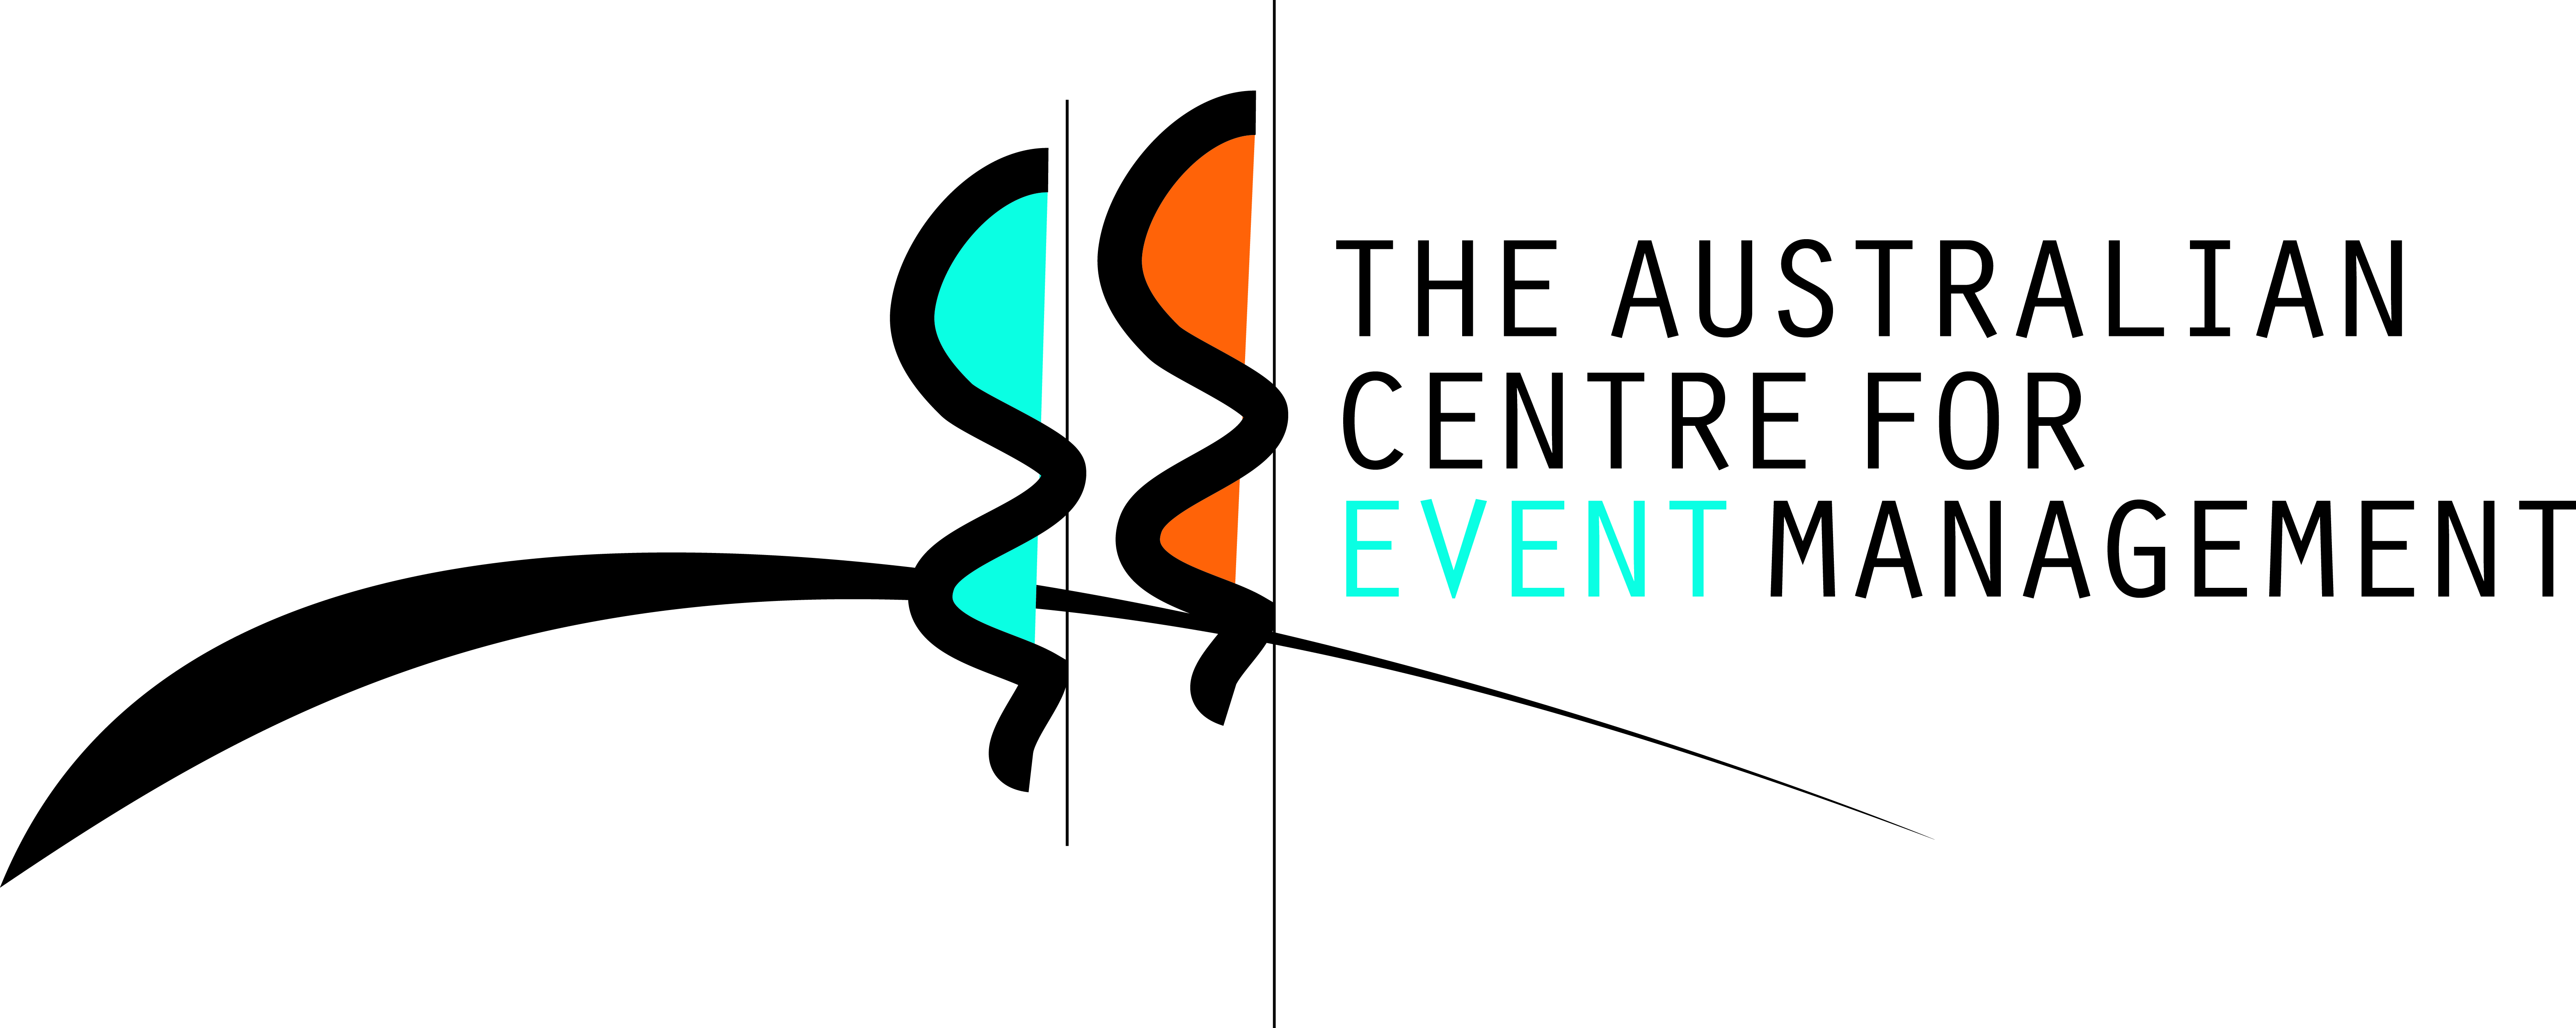 The Australian Centre of event management